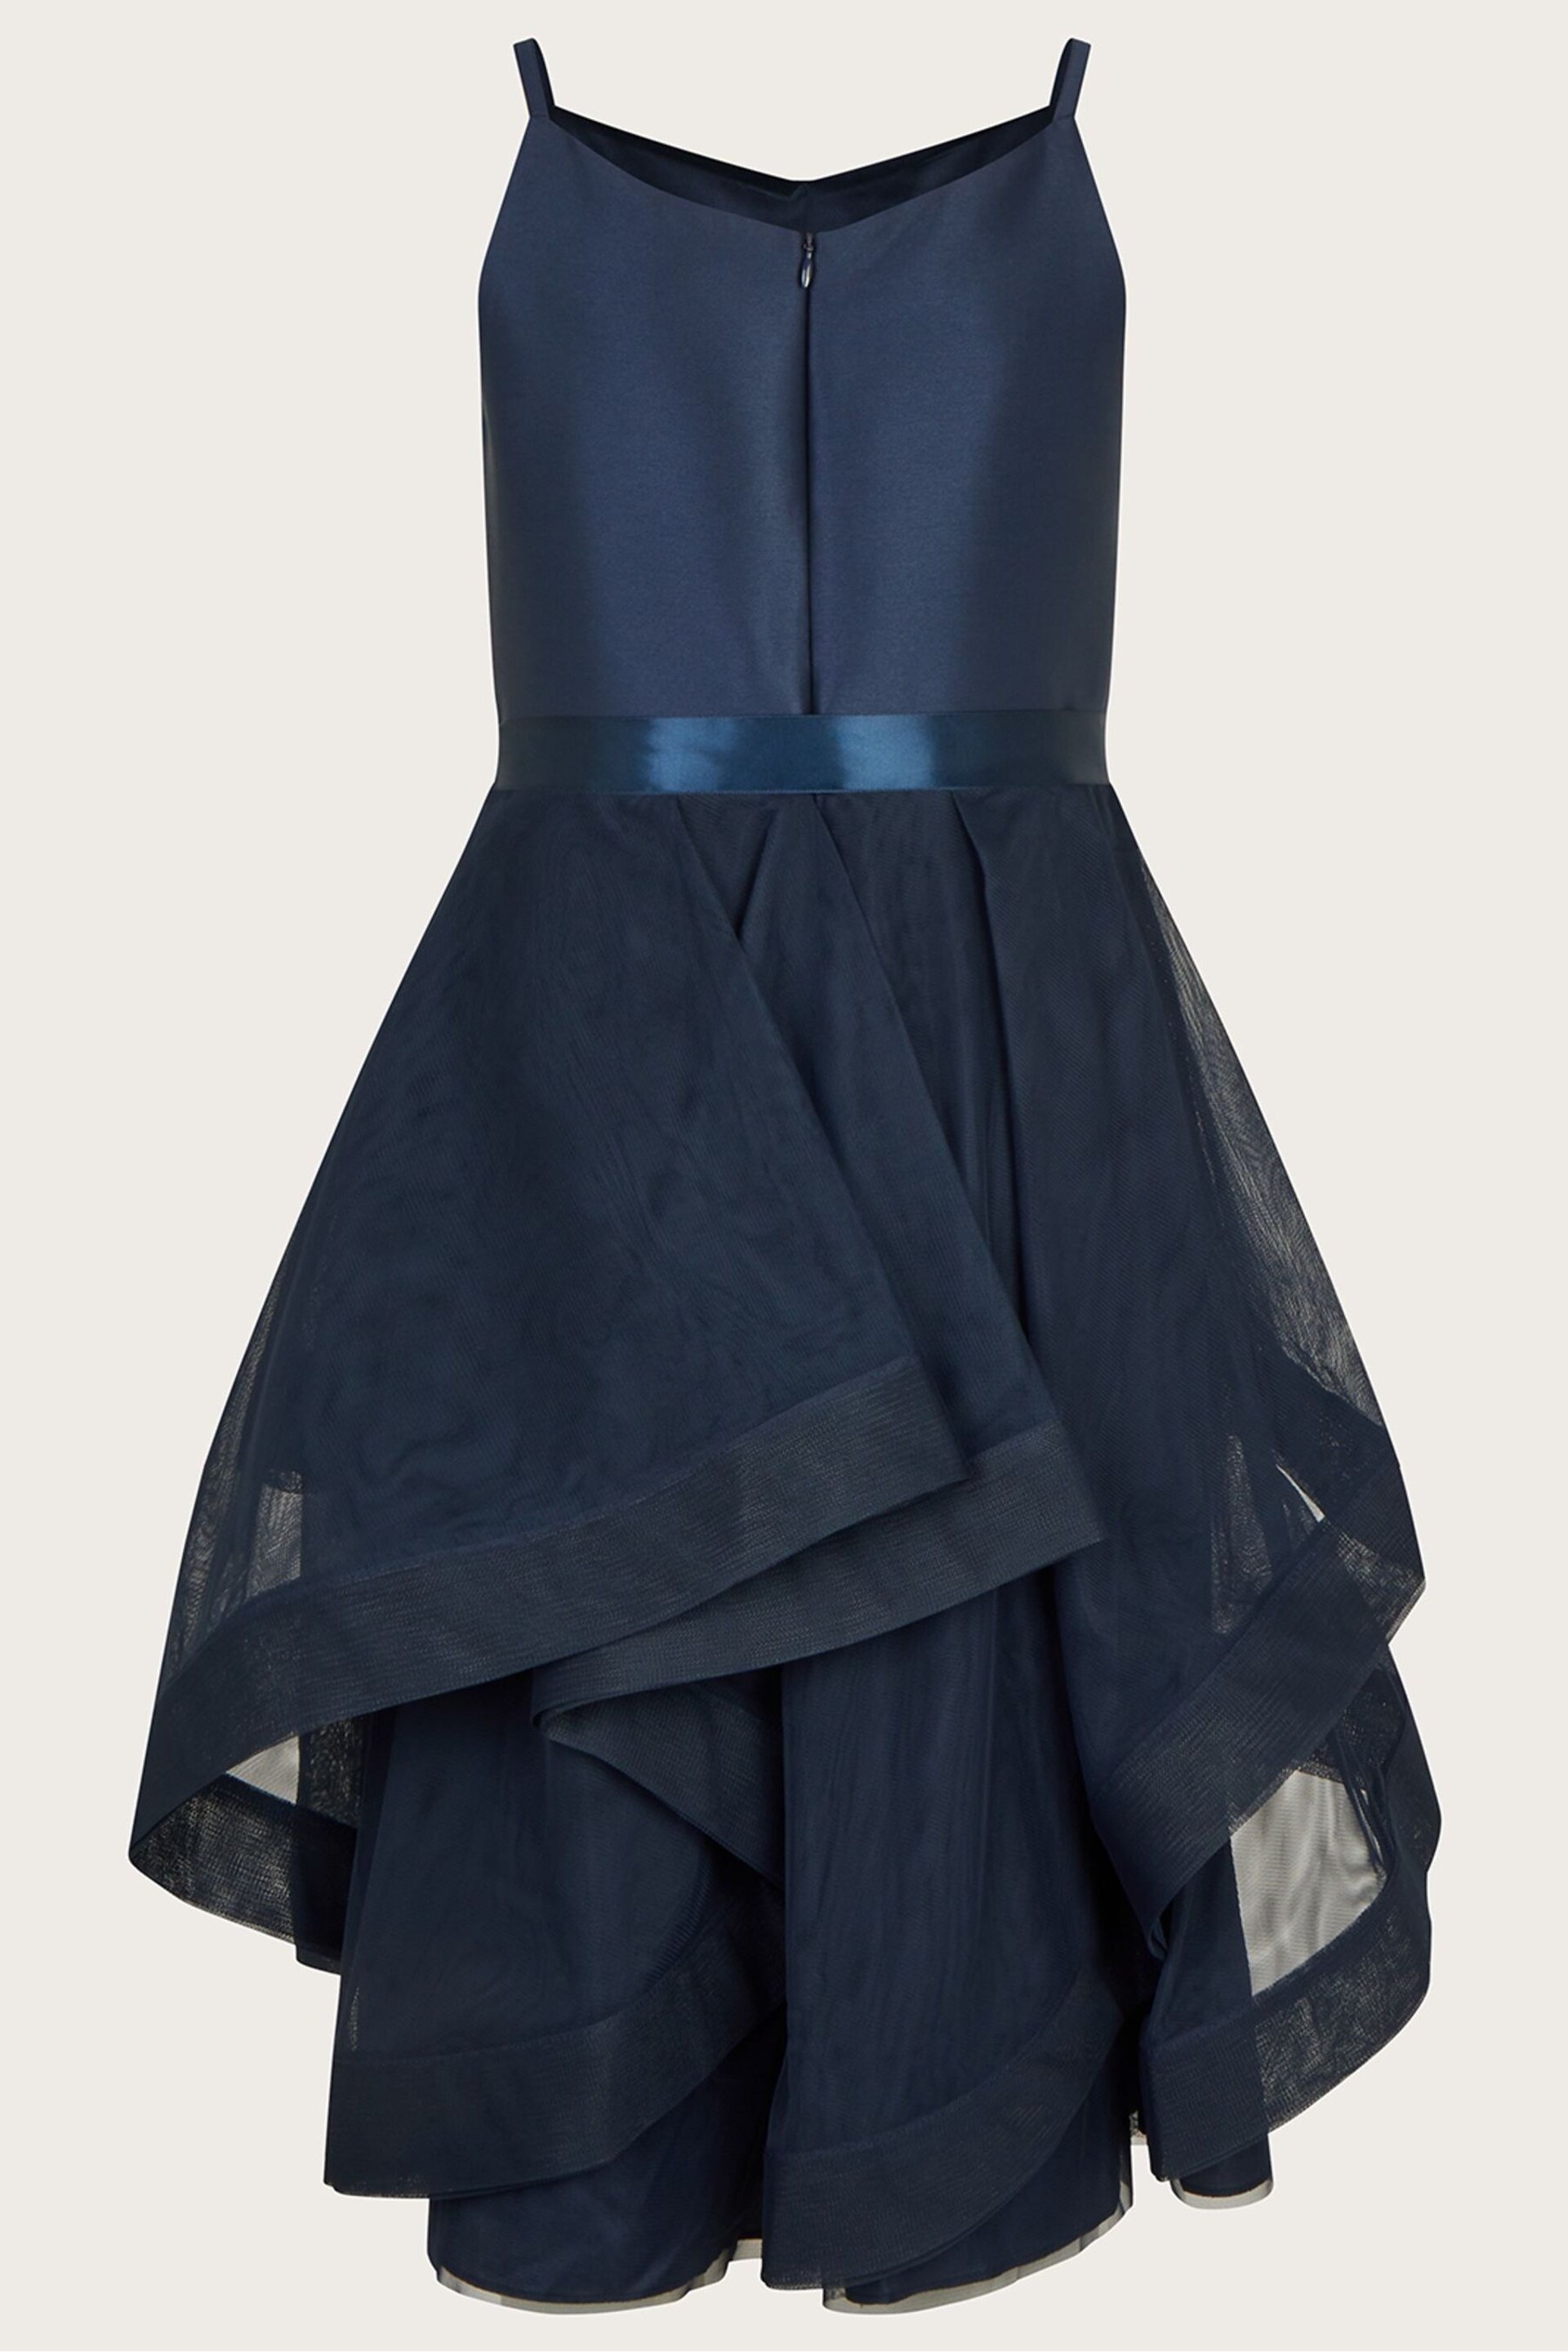 Monsoon Blue Sienna Ruffle Prom Dress - Image 2 of 3